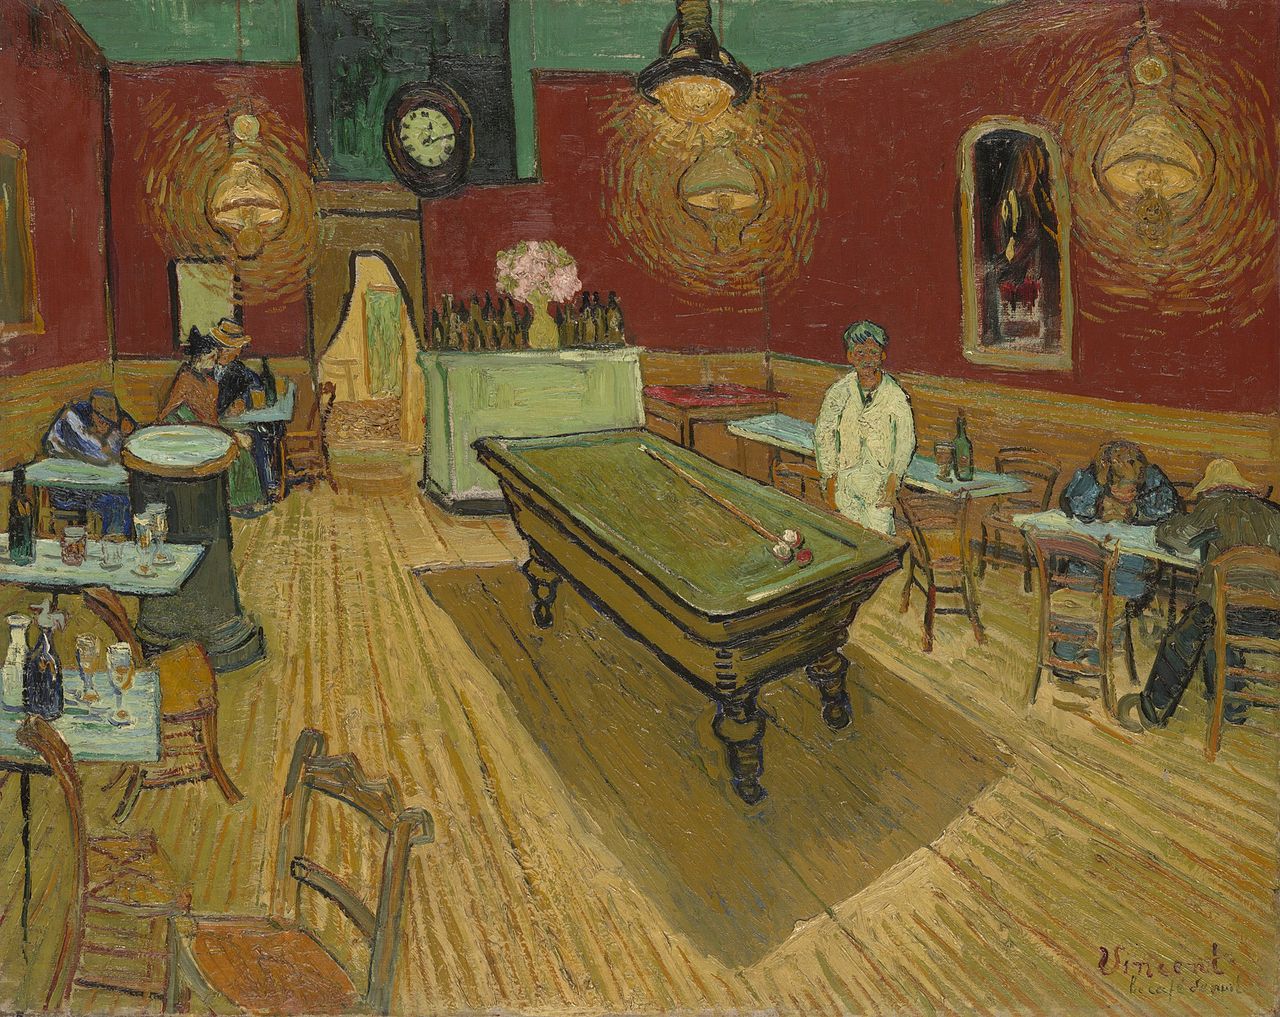 Van Gogh - The Night Cafe